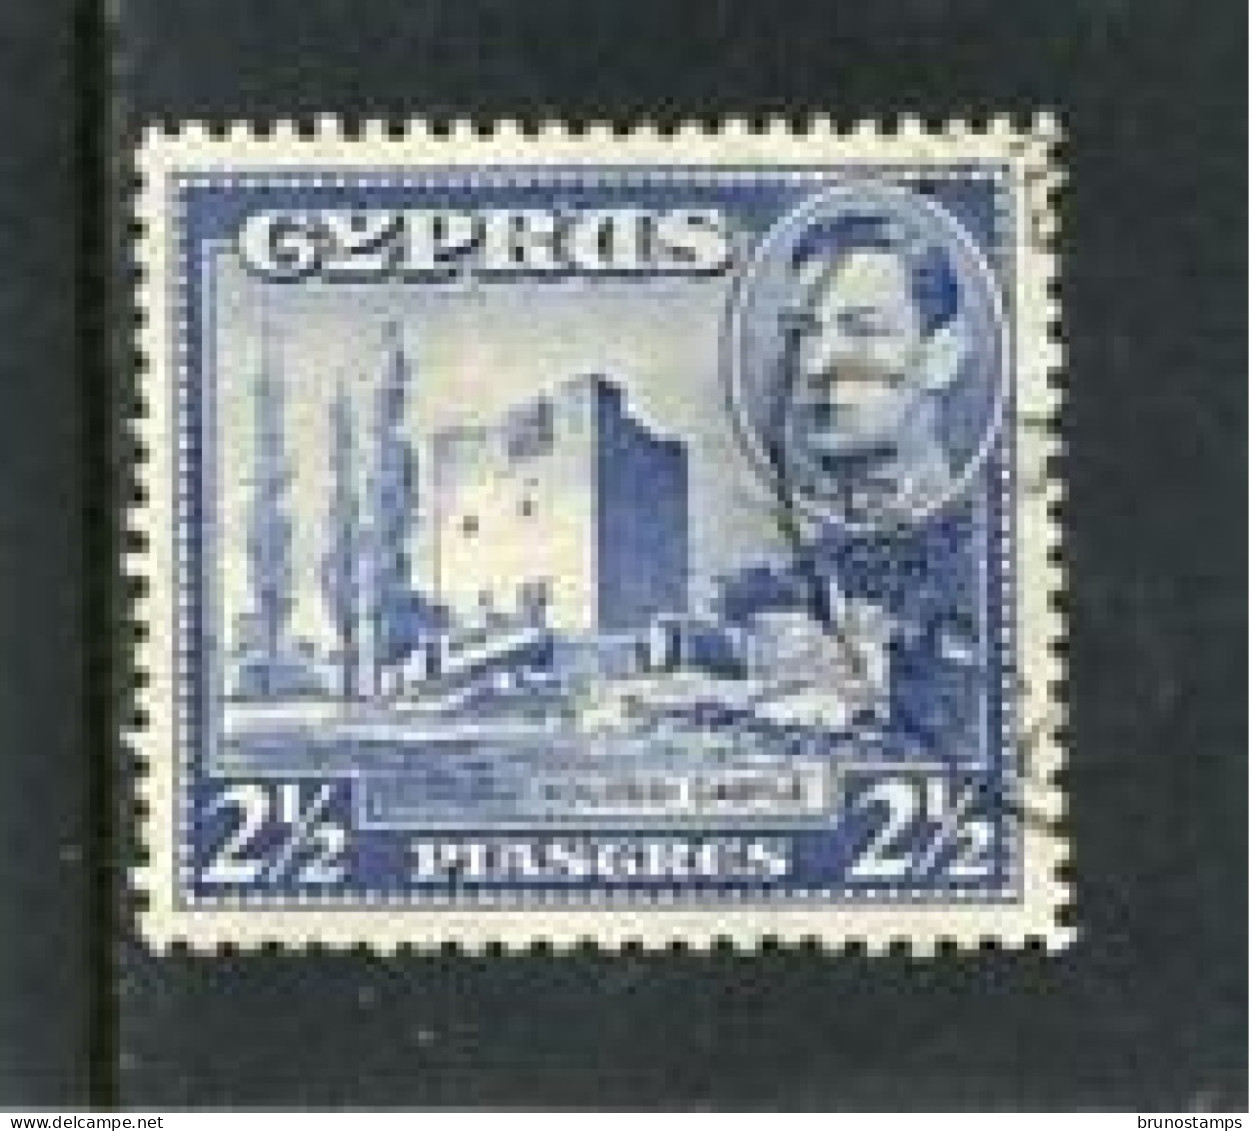 CYPRUS - 1938  GEORGE VI  2 1/2 Pi  FINE USED - Chypre (...-1960)